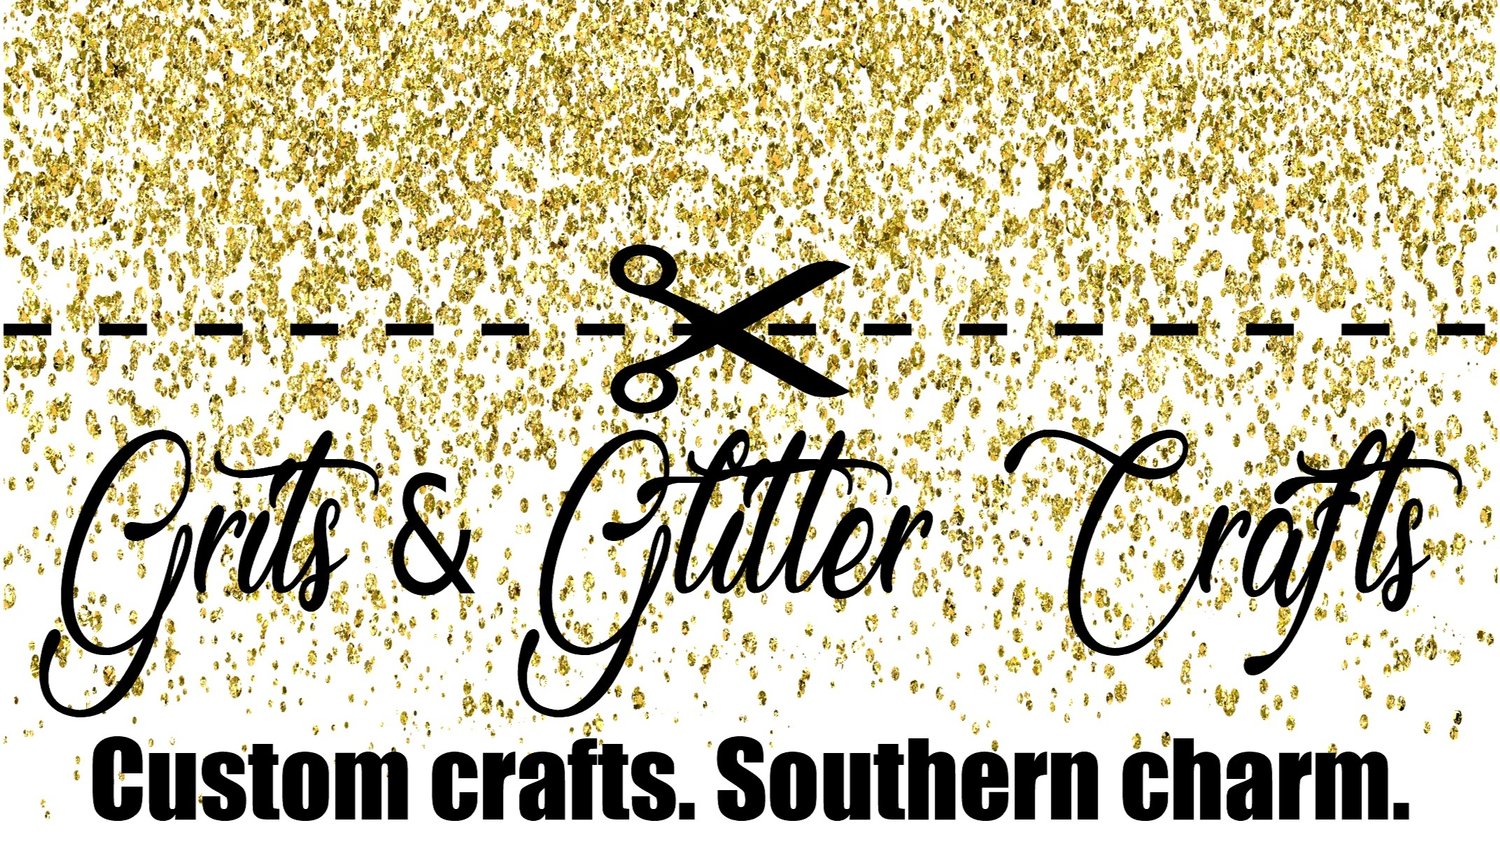 Grits & Glitter Crafts